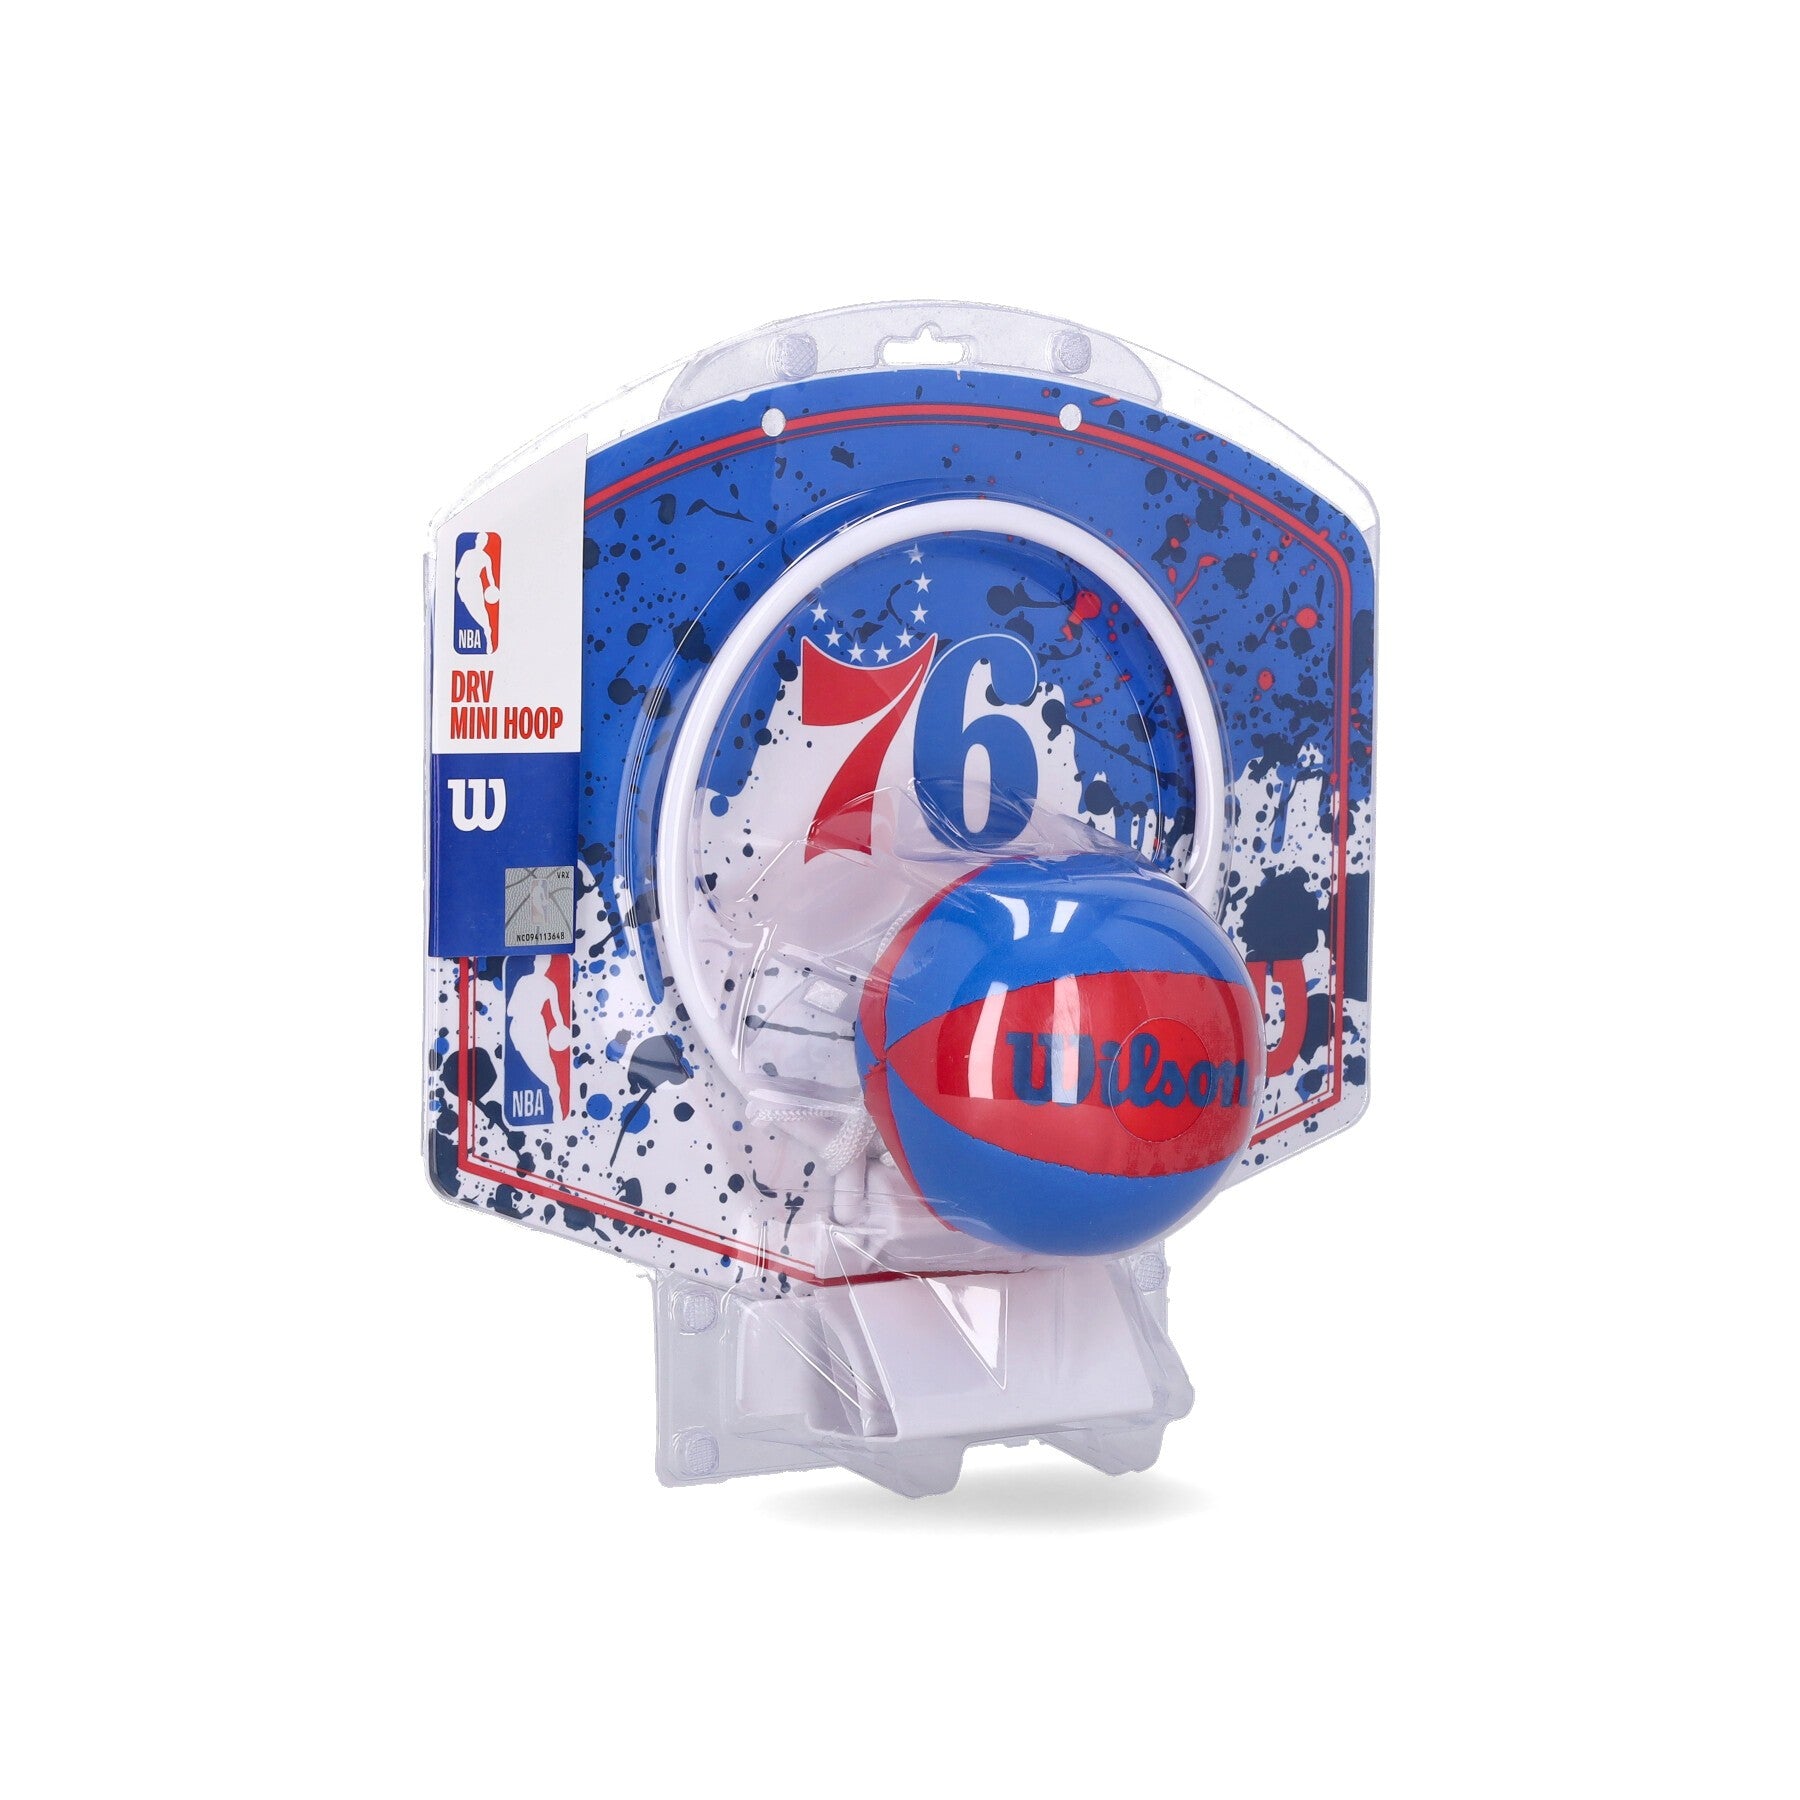 Mini Basketball Set Men's Nba Team Mini Hoop Phi76e Original Team Colors